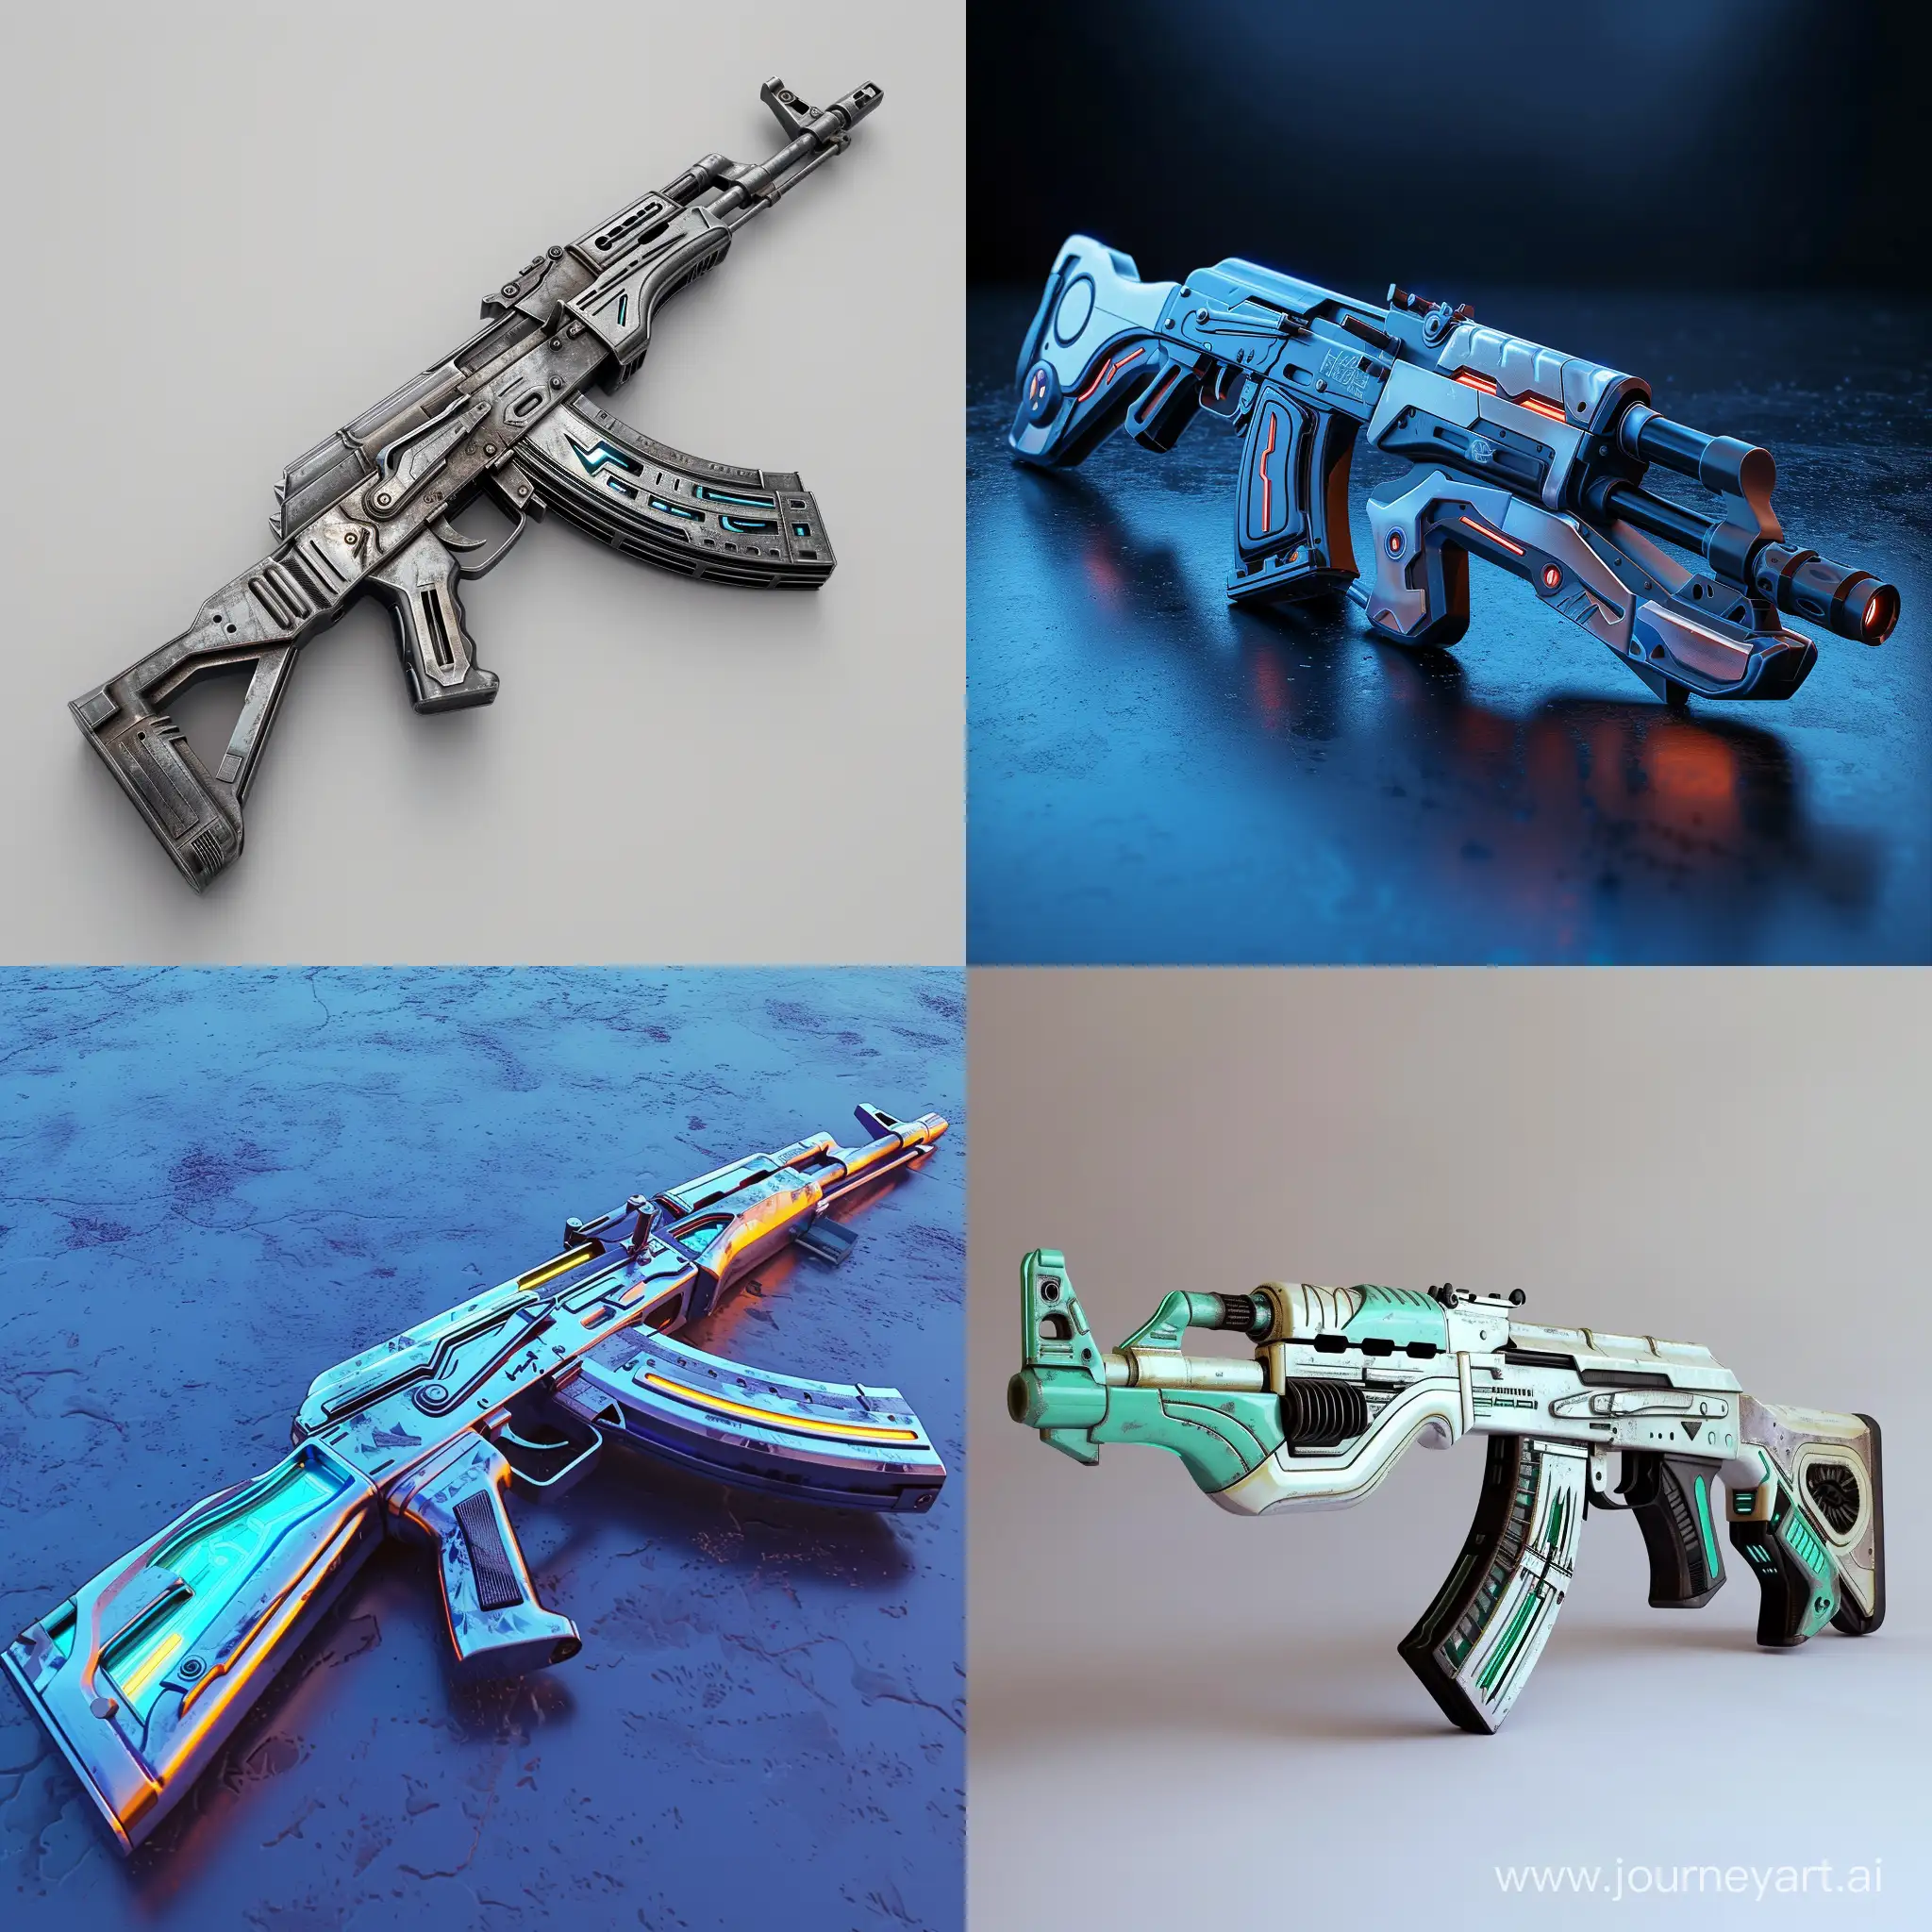 Futuristic AK-47, in futuristic style